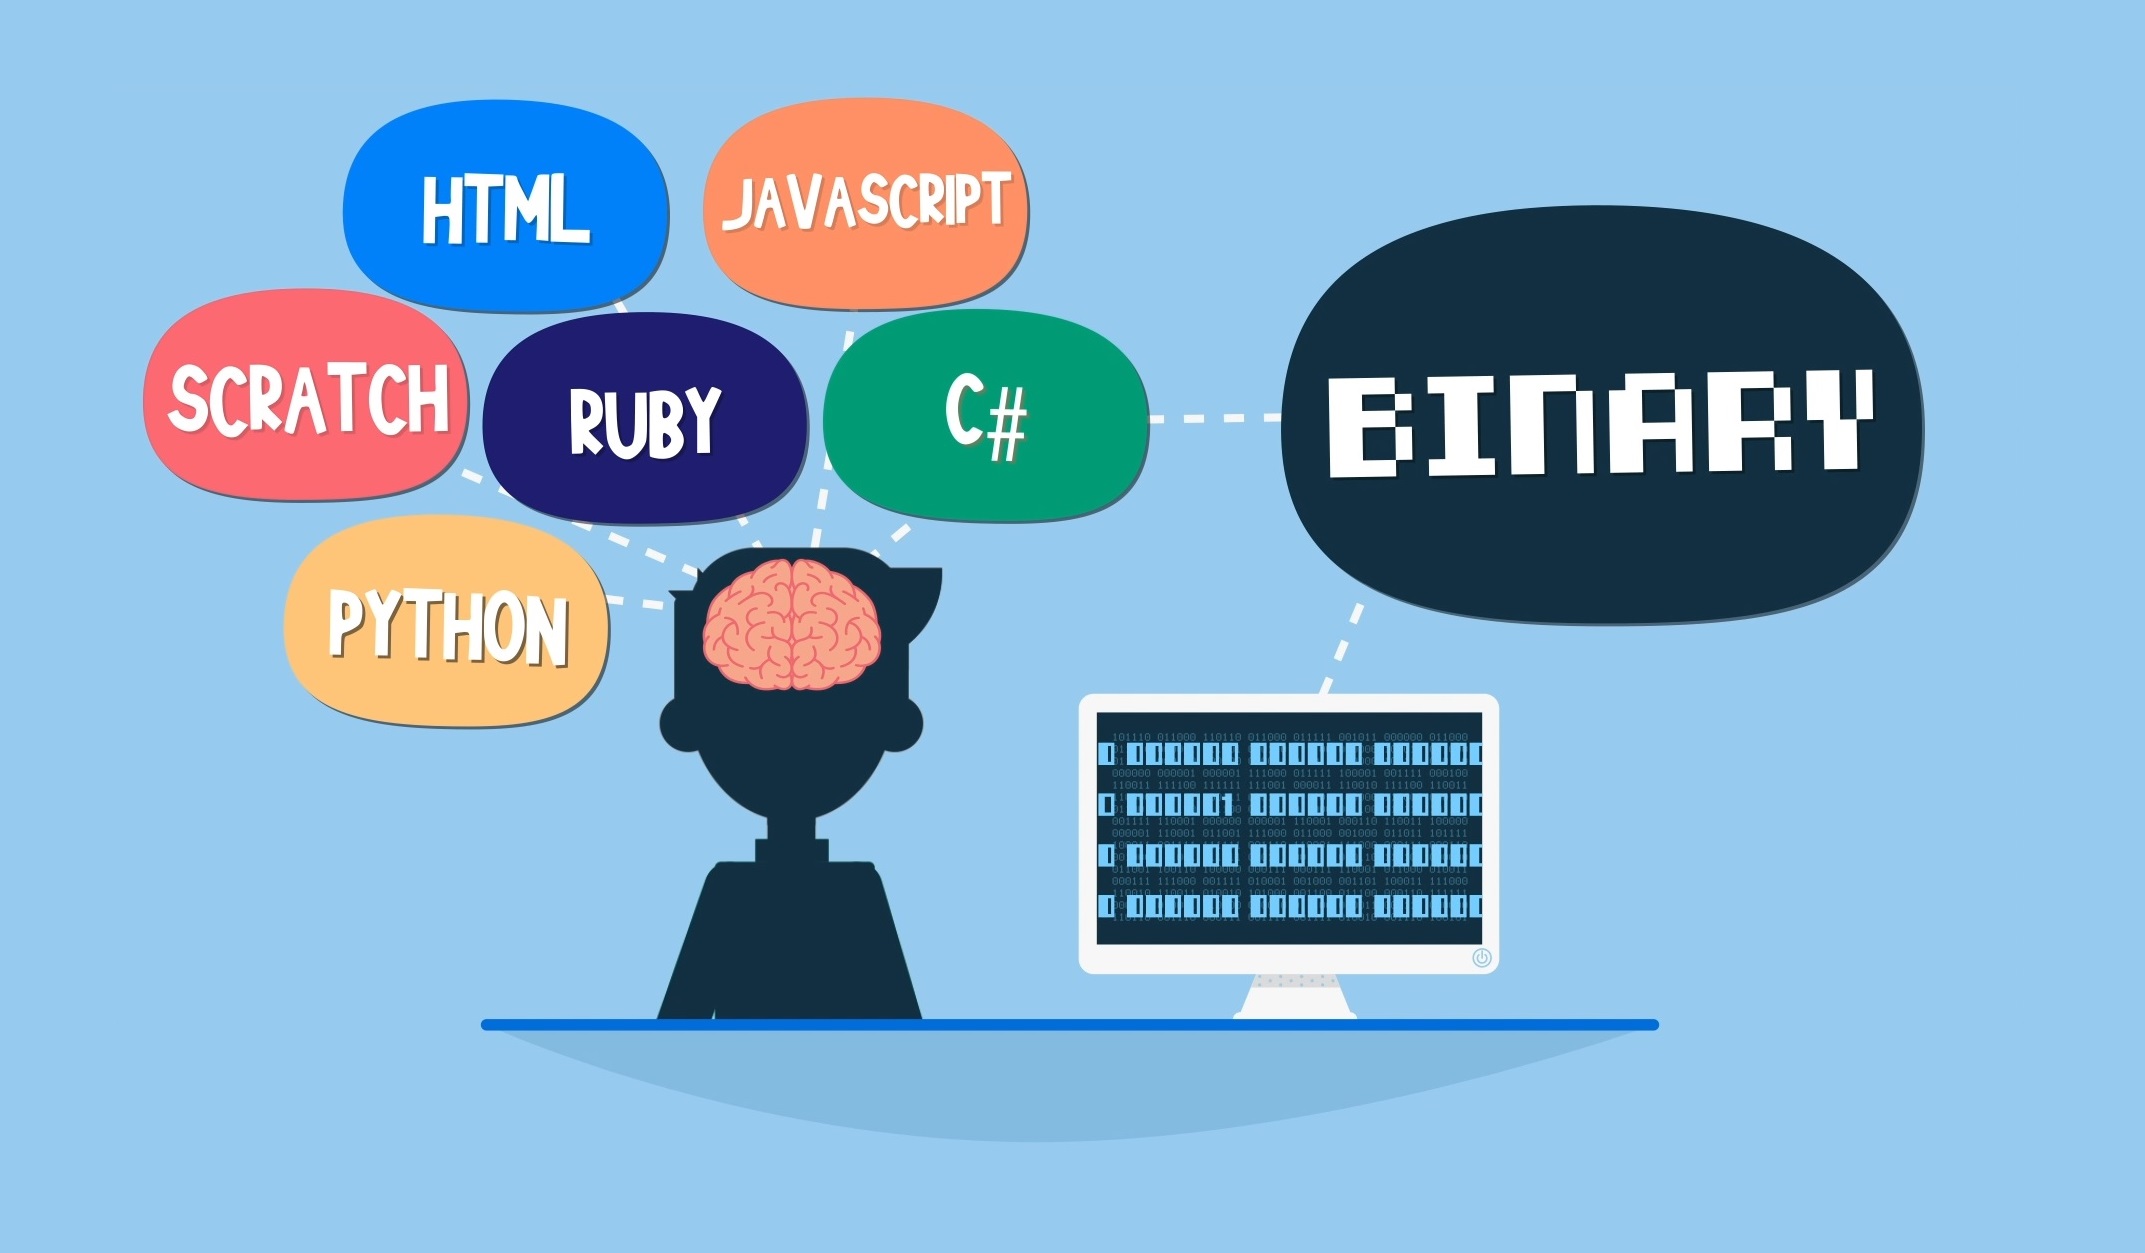 Binary: HTML, Javascript, Ruby, Python, Scratch